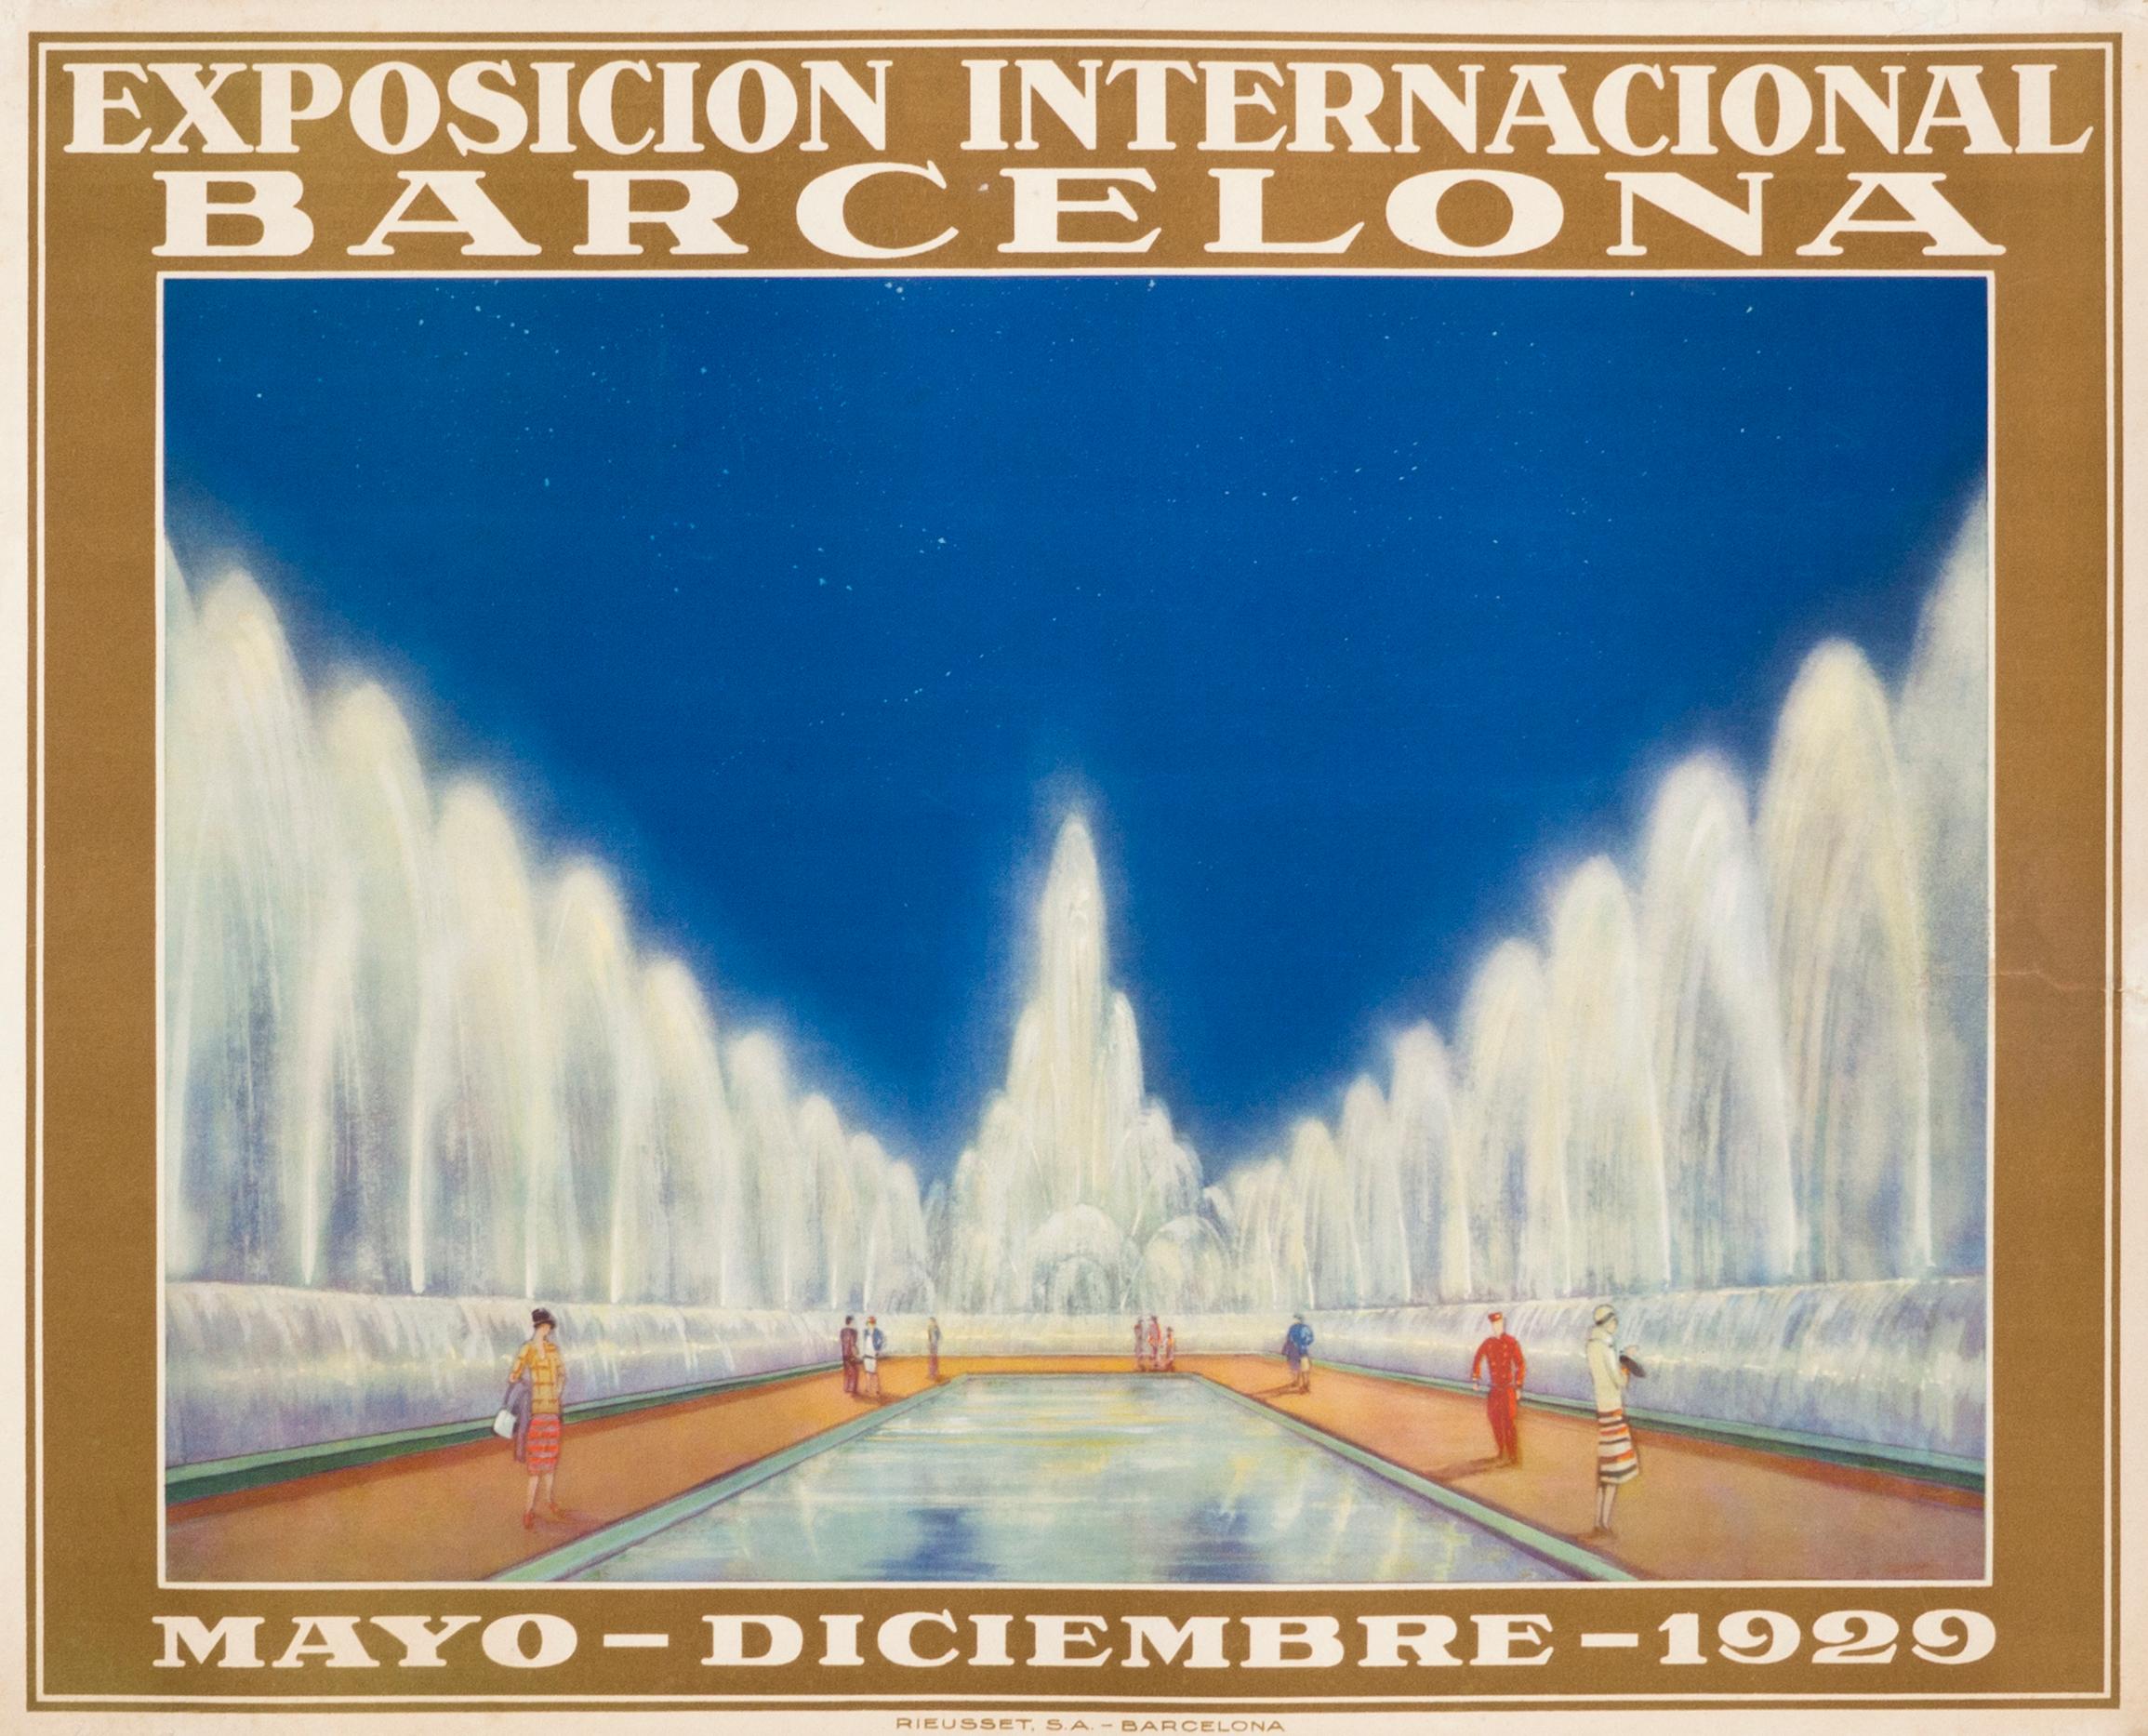 "Exposicion Internacional Barcelona" International Exposition Original Poster - Print by Unknown